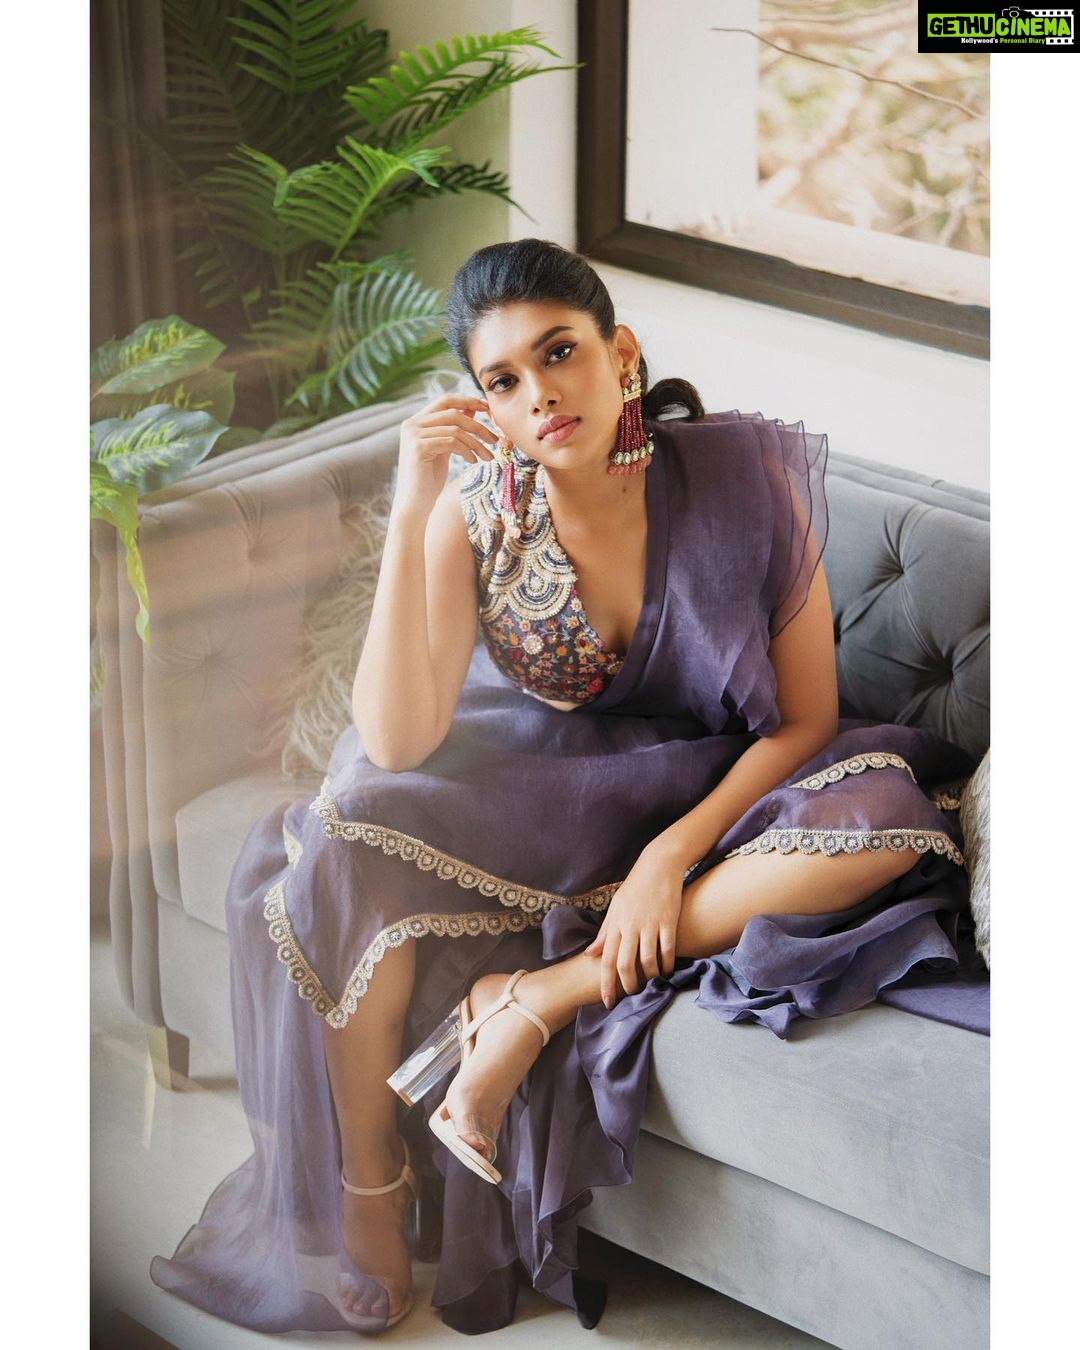 Dushara Vijayan Instagram - Shot by : @mobinkurien Assistance : @kishore_k2studios Styling : @stylemuze H&M : @phiphi_shimray #actor #actress #model #indianmodel #indianactor #indianactress #fashion #design #photoshoot #indian #southindian #stylist #makeup #artist #fashionmodel #style #modeling